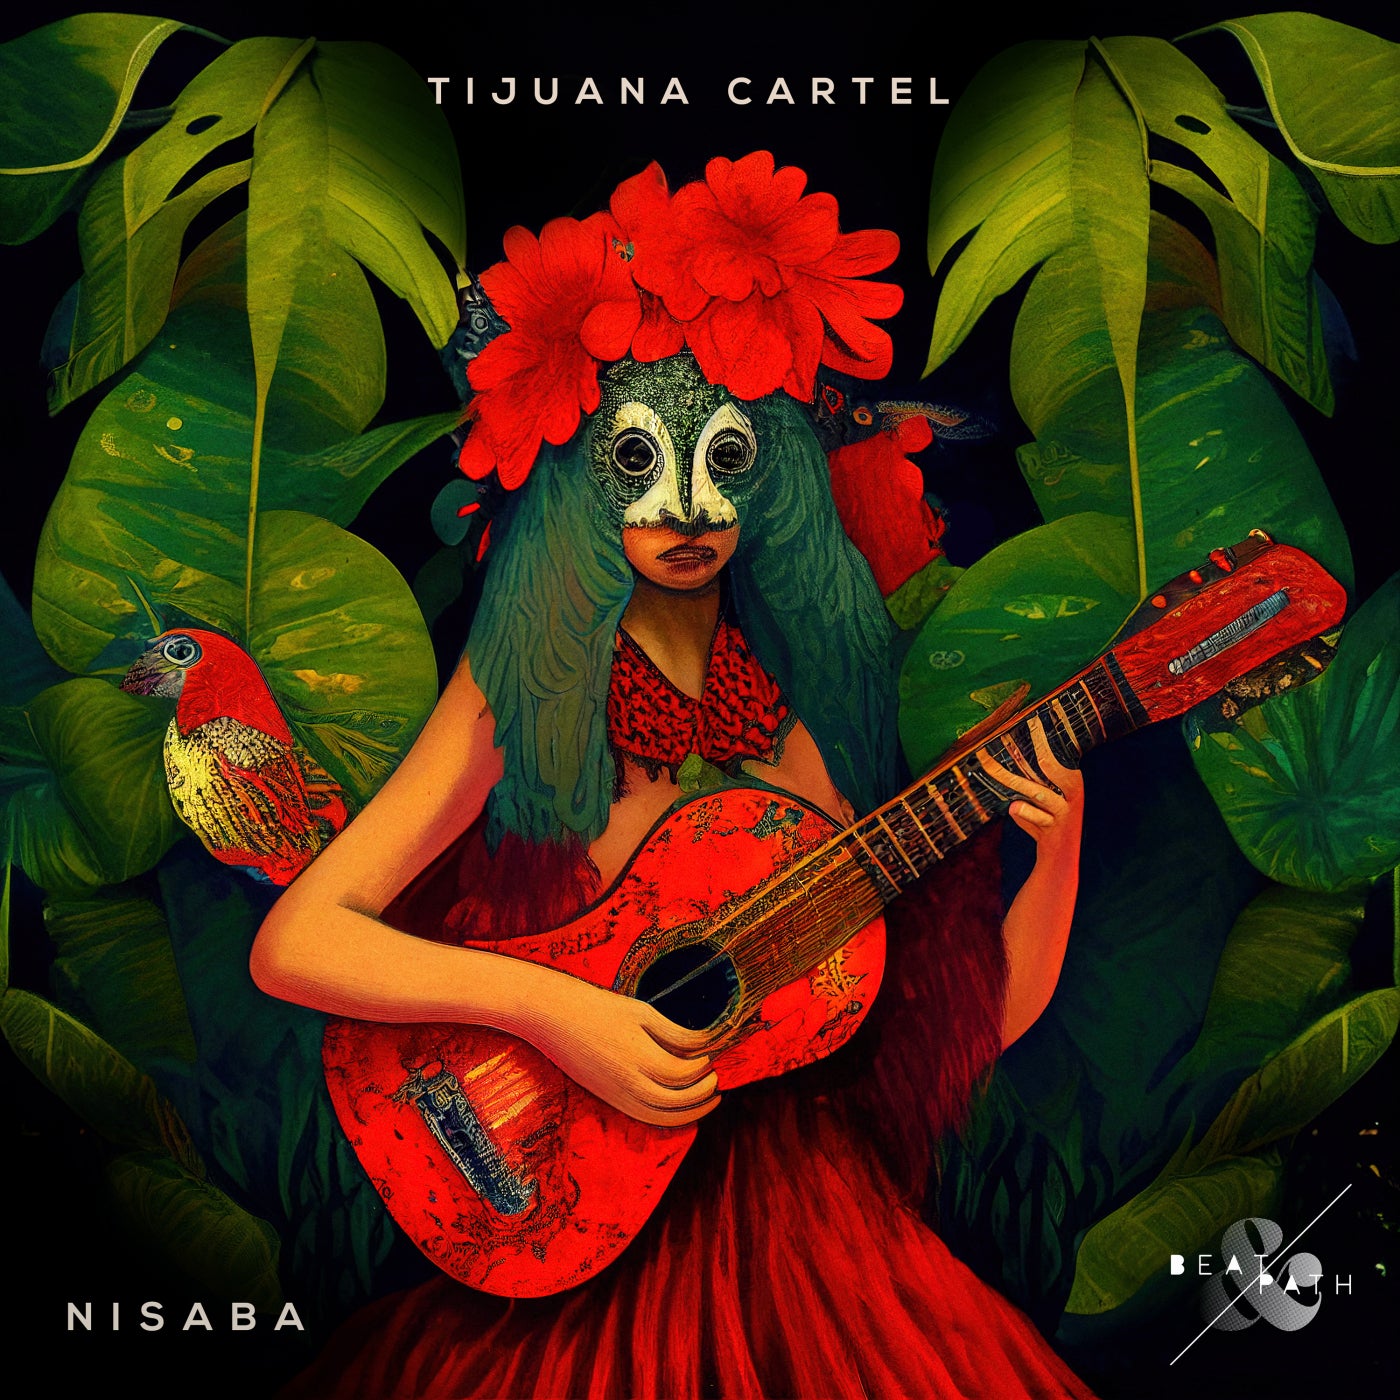 Tijuana Cartel - Nisaba [Beat & Path]